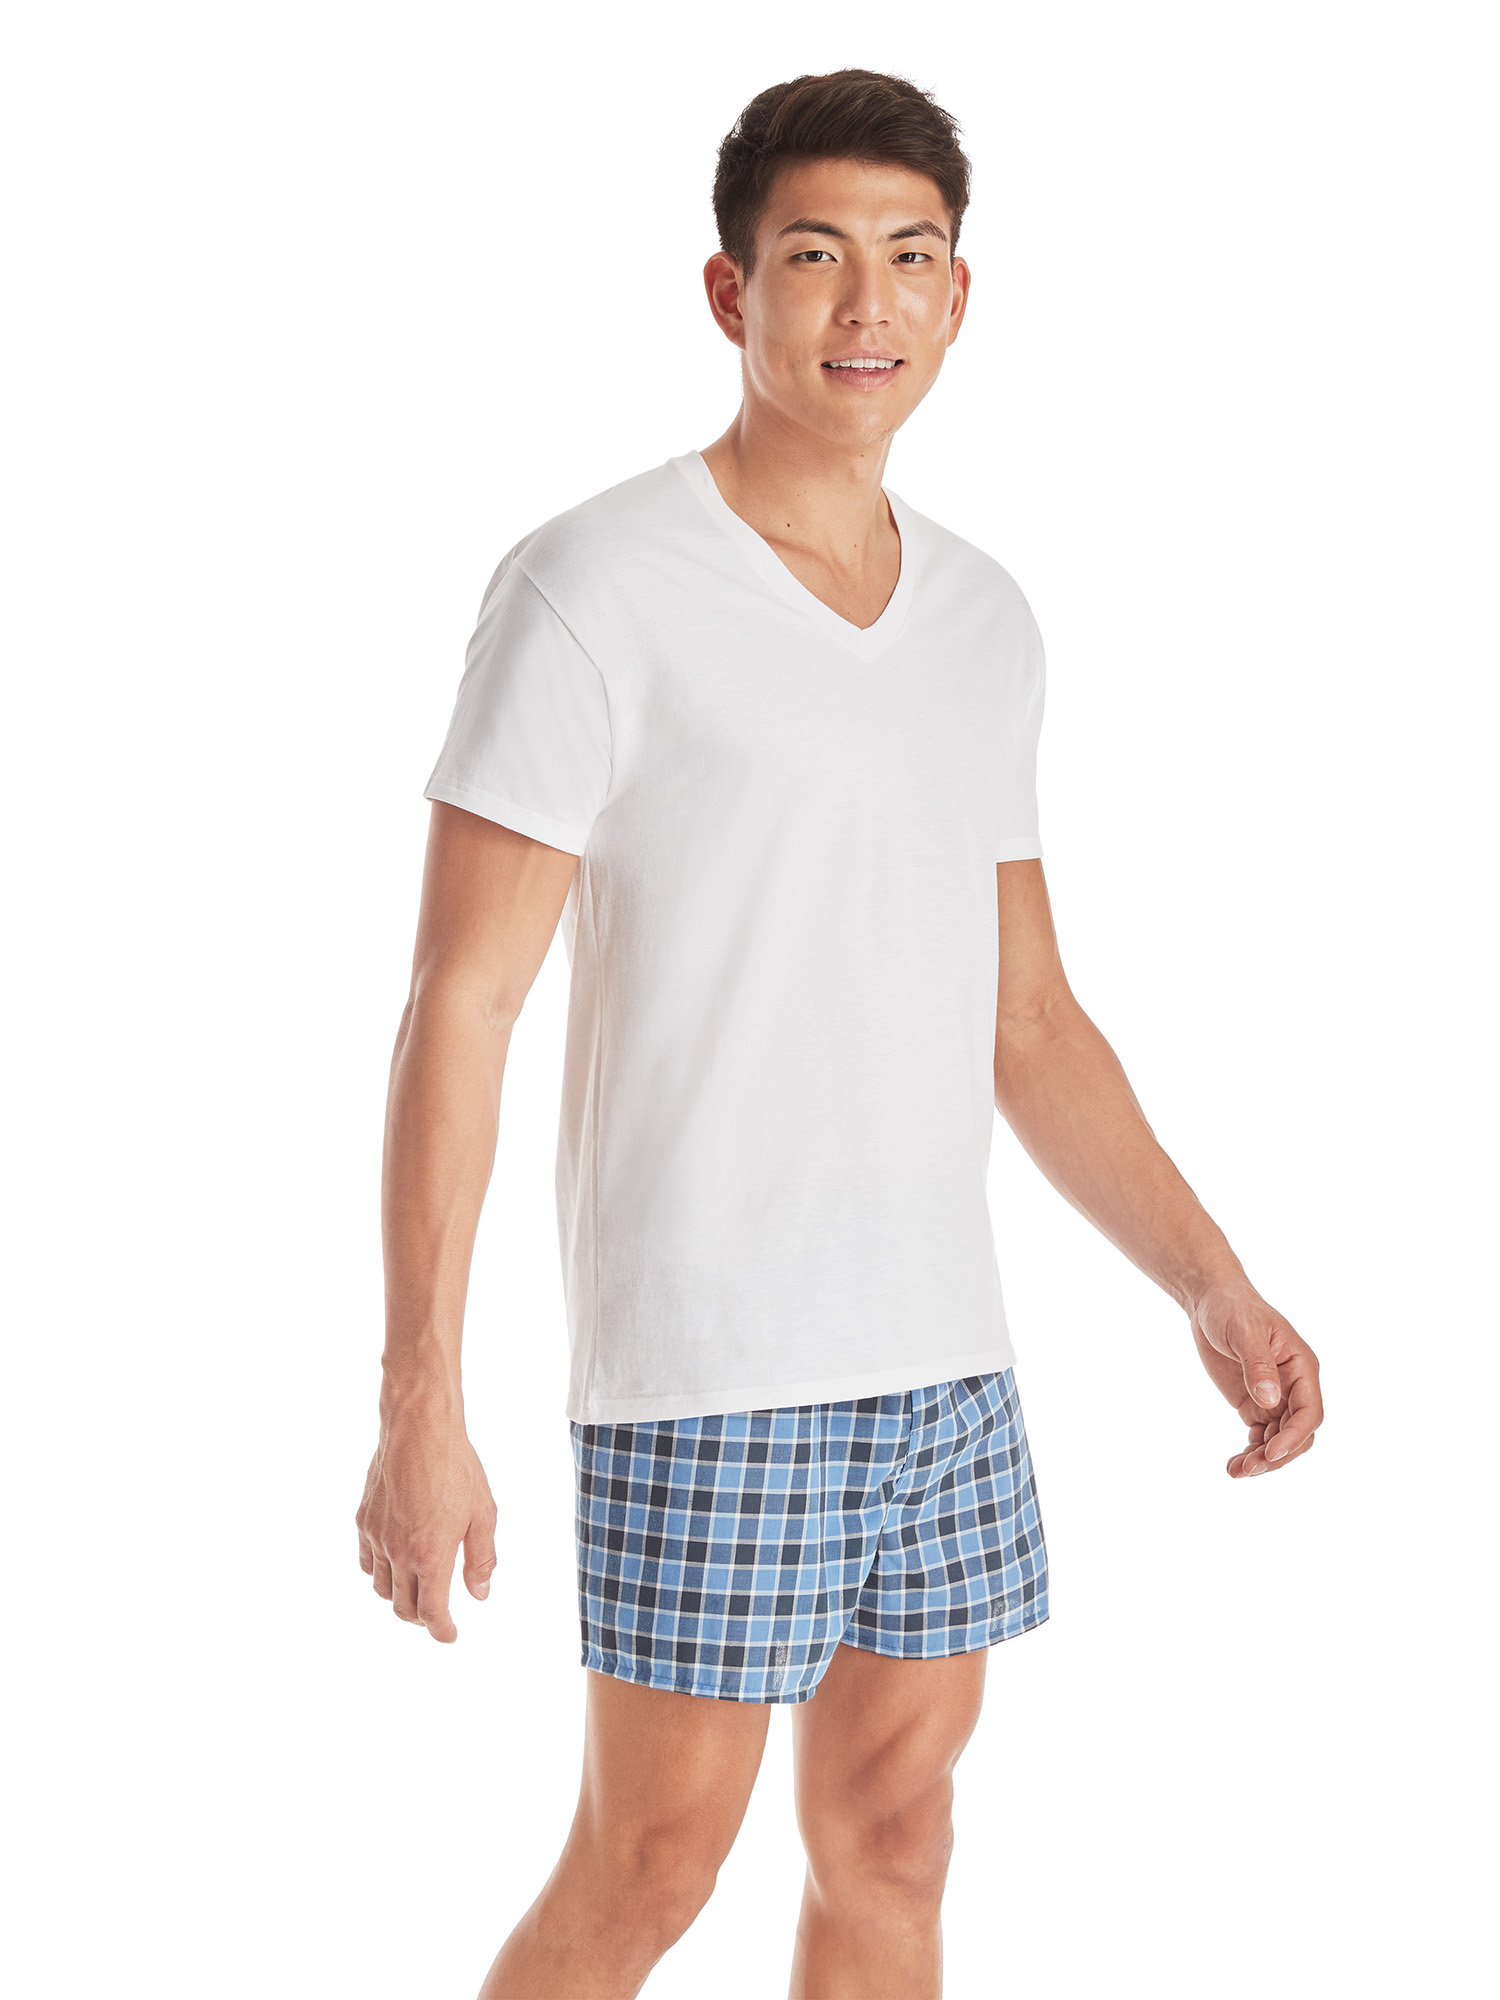 Hanes Men's Super Value Pack White V-Neck Undershirts, 10 Pack - image 5 of 9